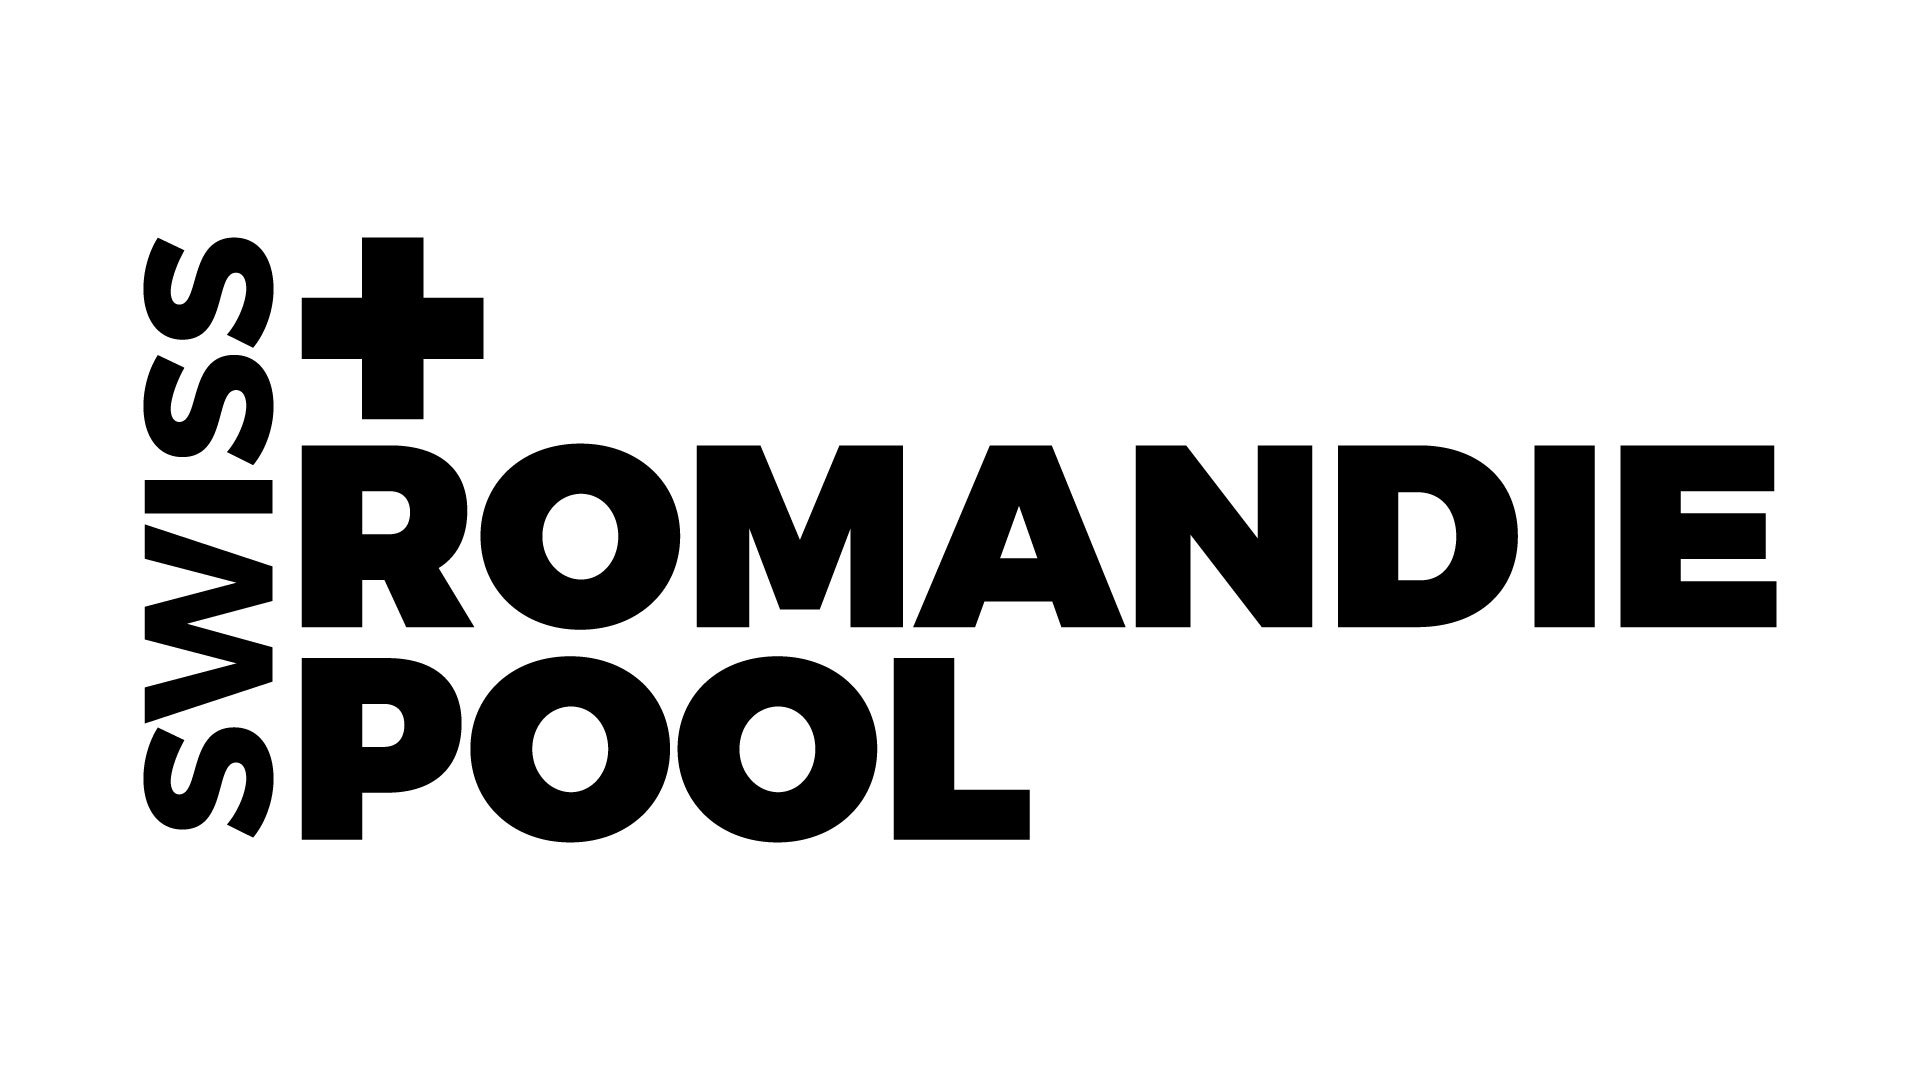 Le Swiss Romandie Pool intègre les outils Instar Analytics et Media Wizard